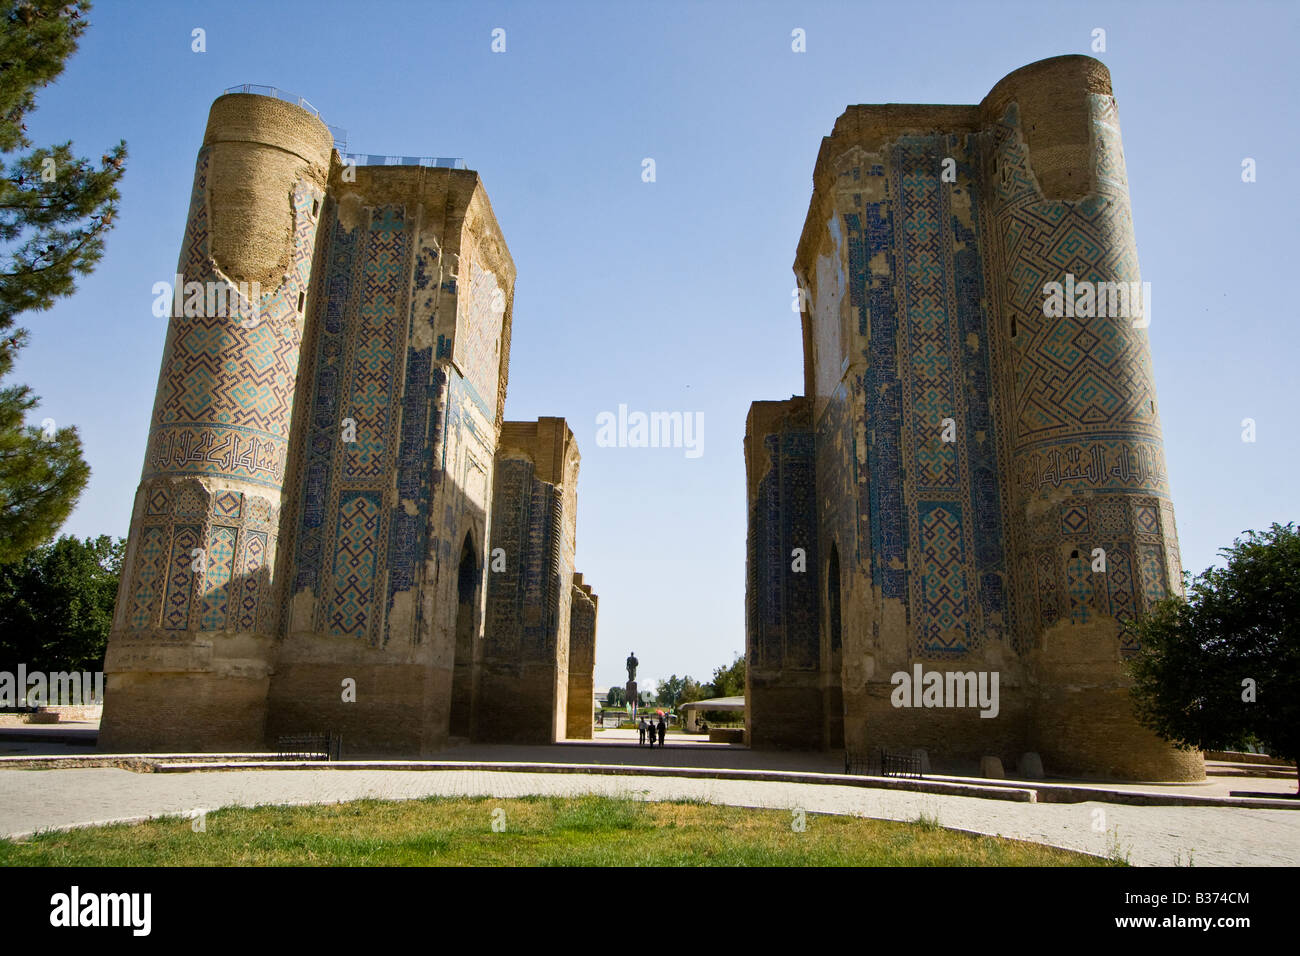 Ak Saray Palace a Shakhrisabz Uzbekistan Foto Stock